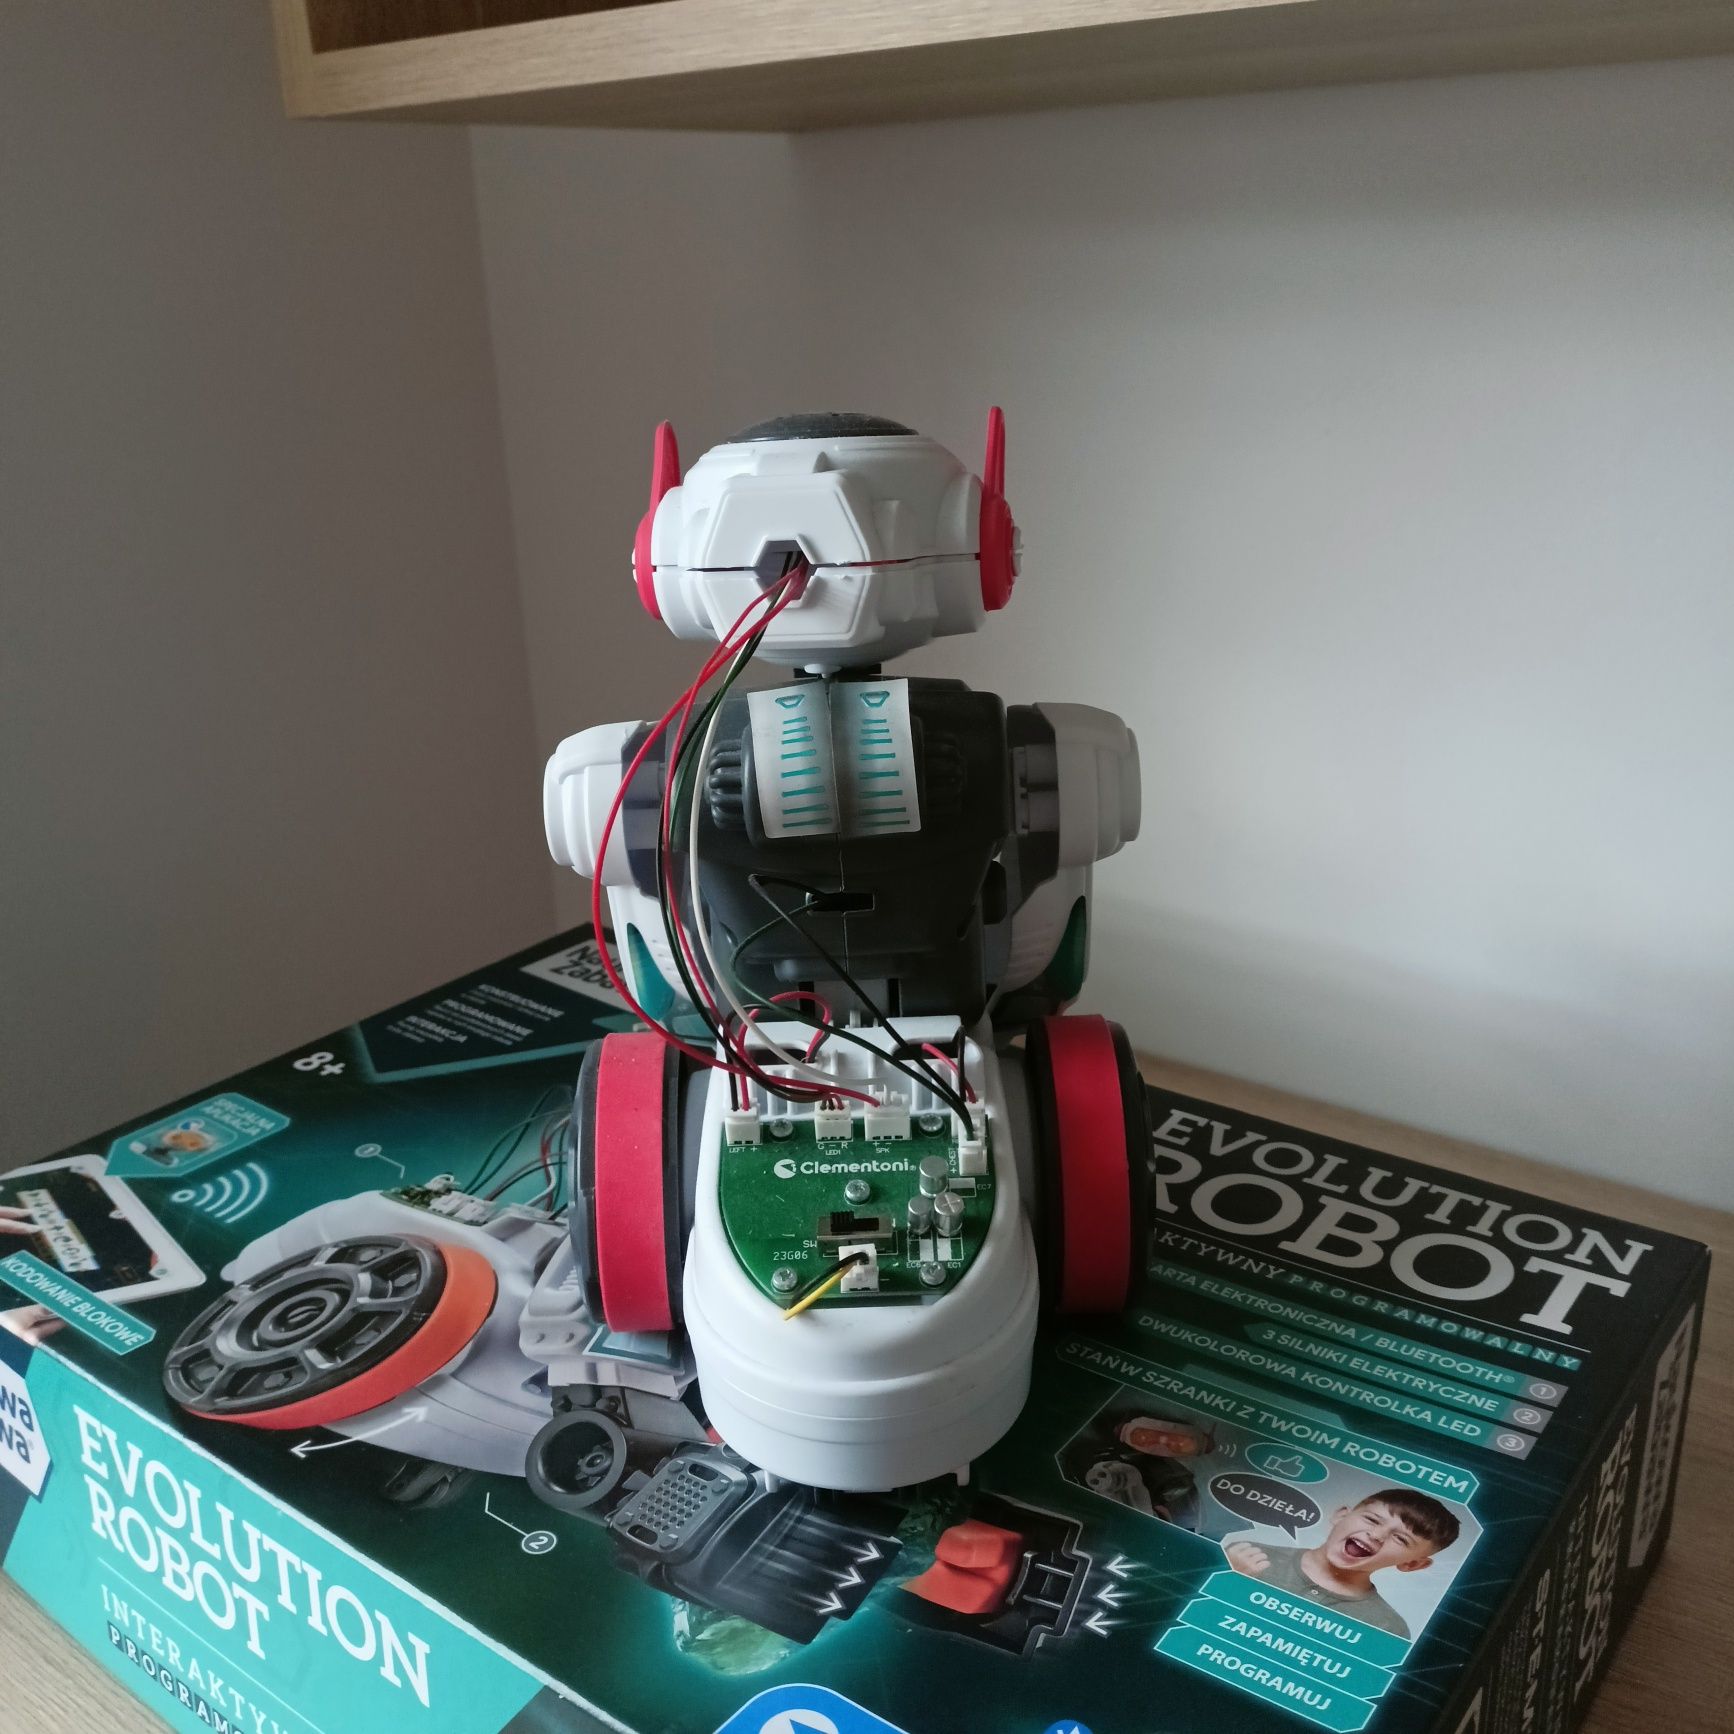 Robot Clementoni Evolution, stan bdb, bluetooth